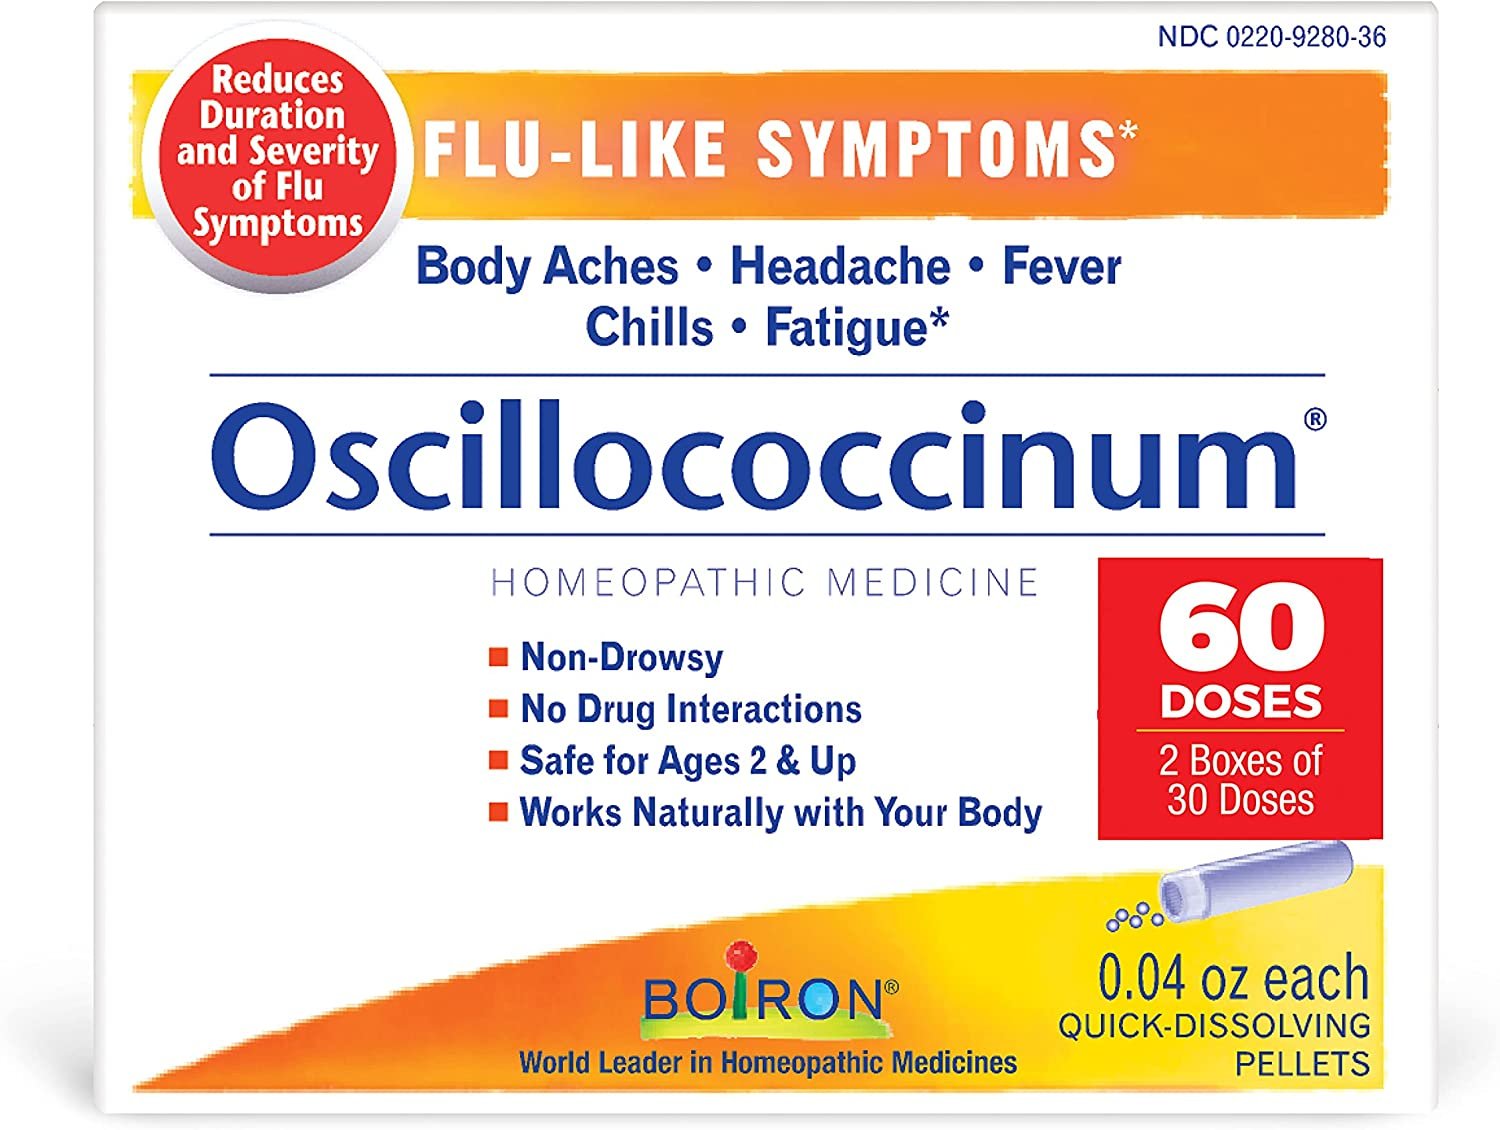 Boiron Oscillococcinum 0.04 Ounce 6 Doses Homeopathic Medicine for Flu-Like Symptoms